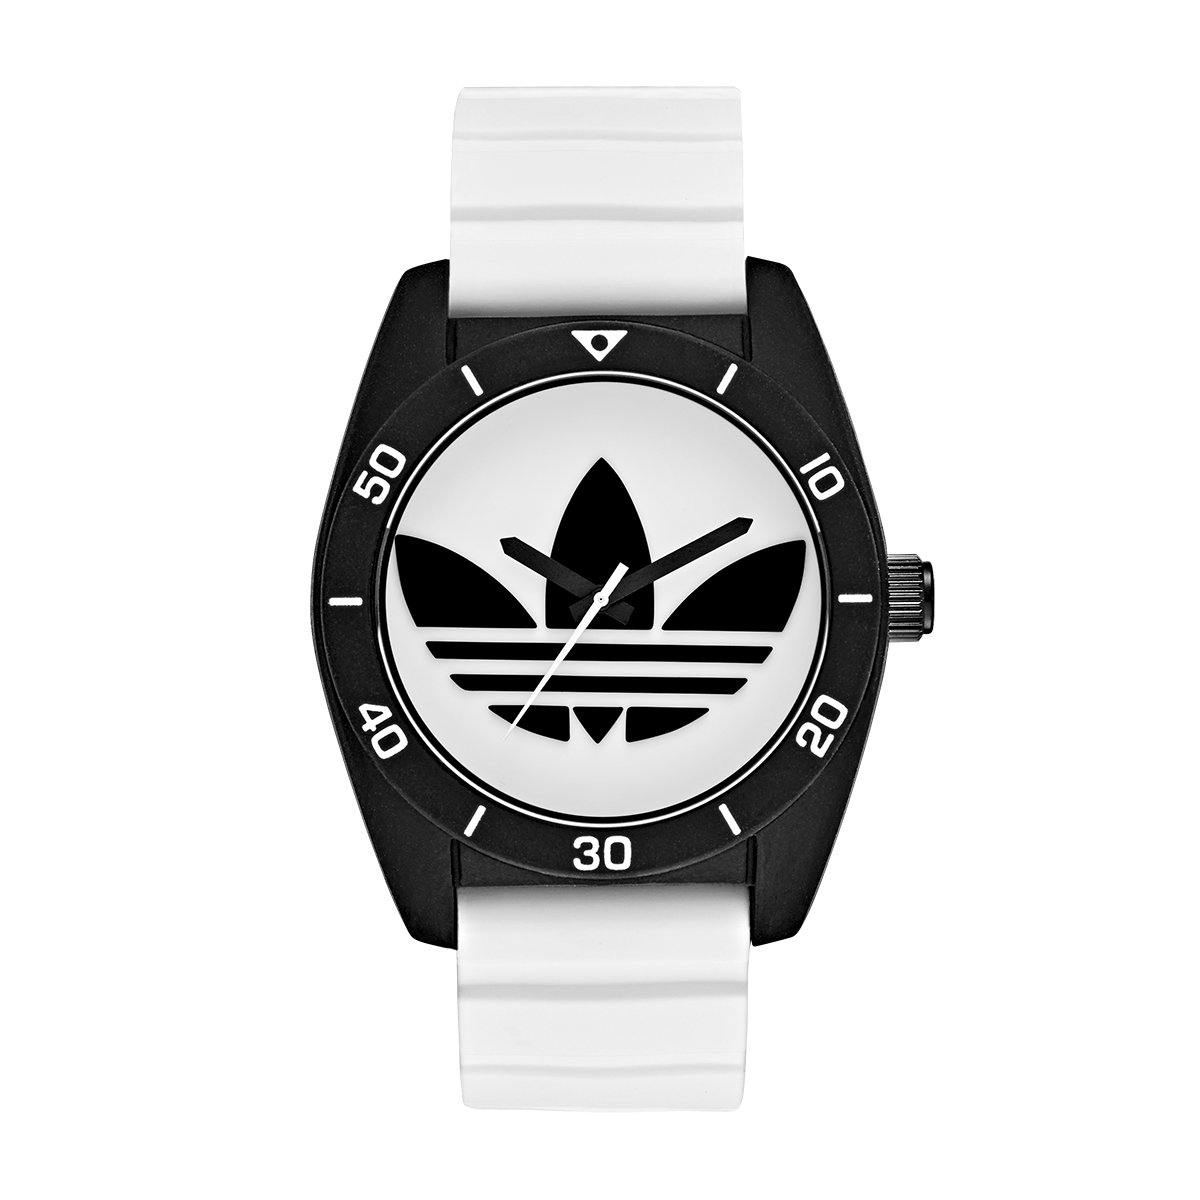 Reloj Caballero Adidas Adh3133